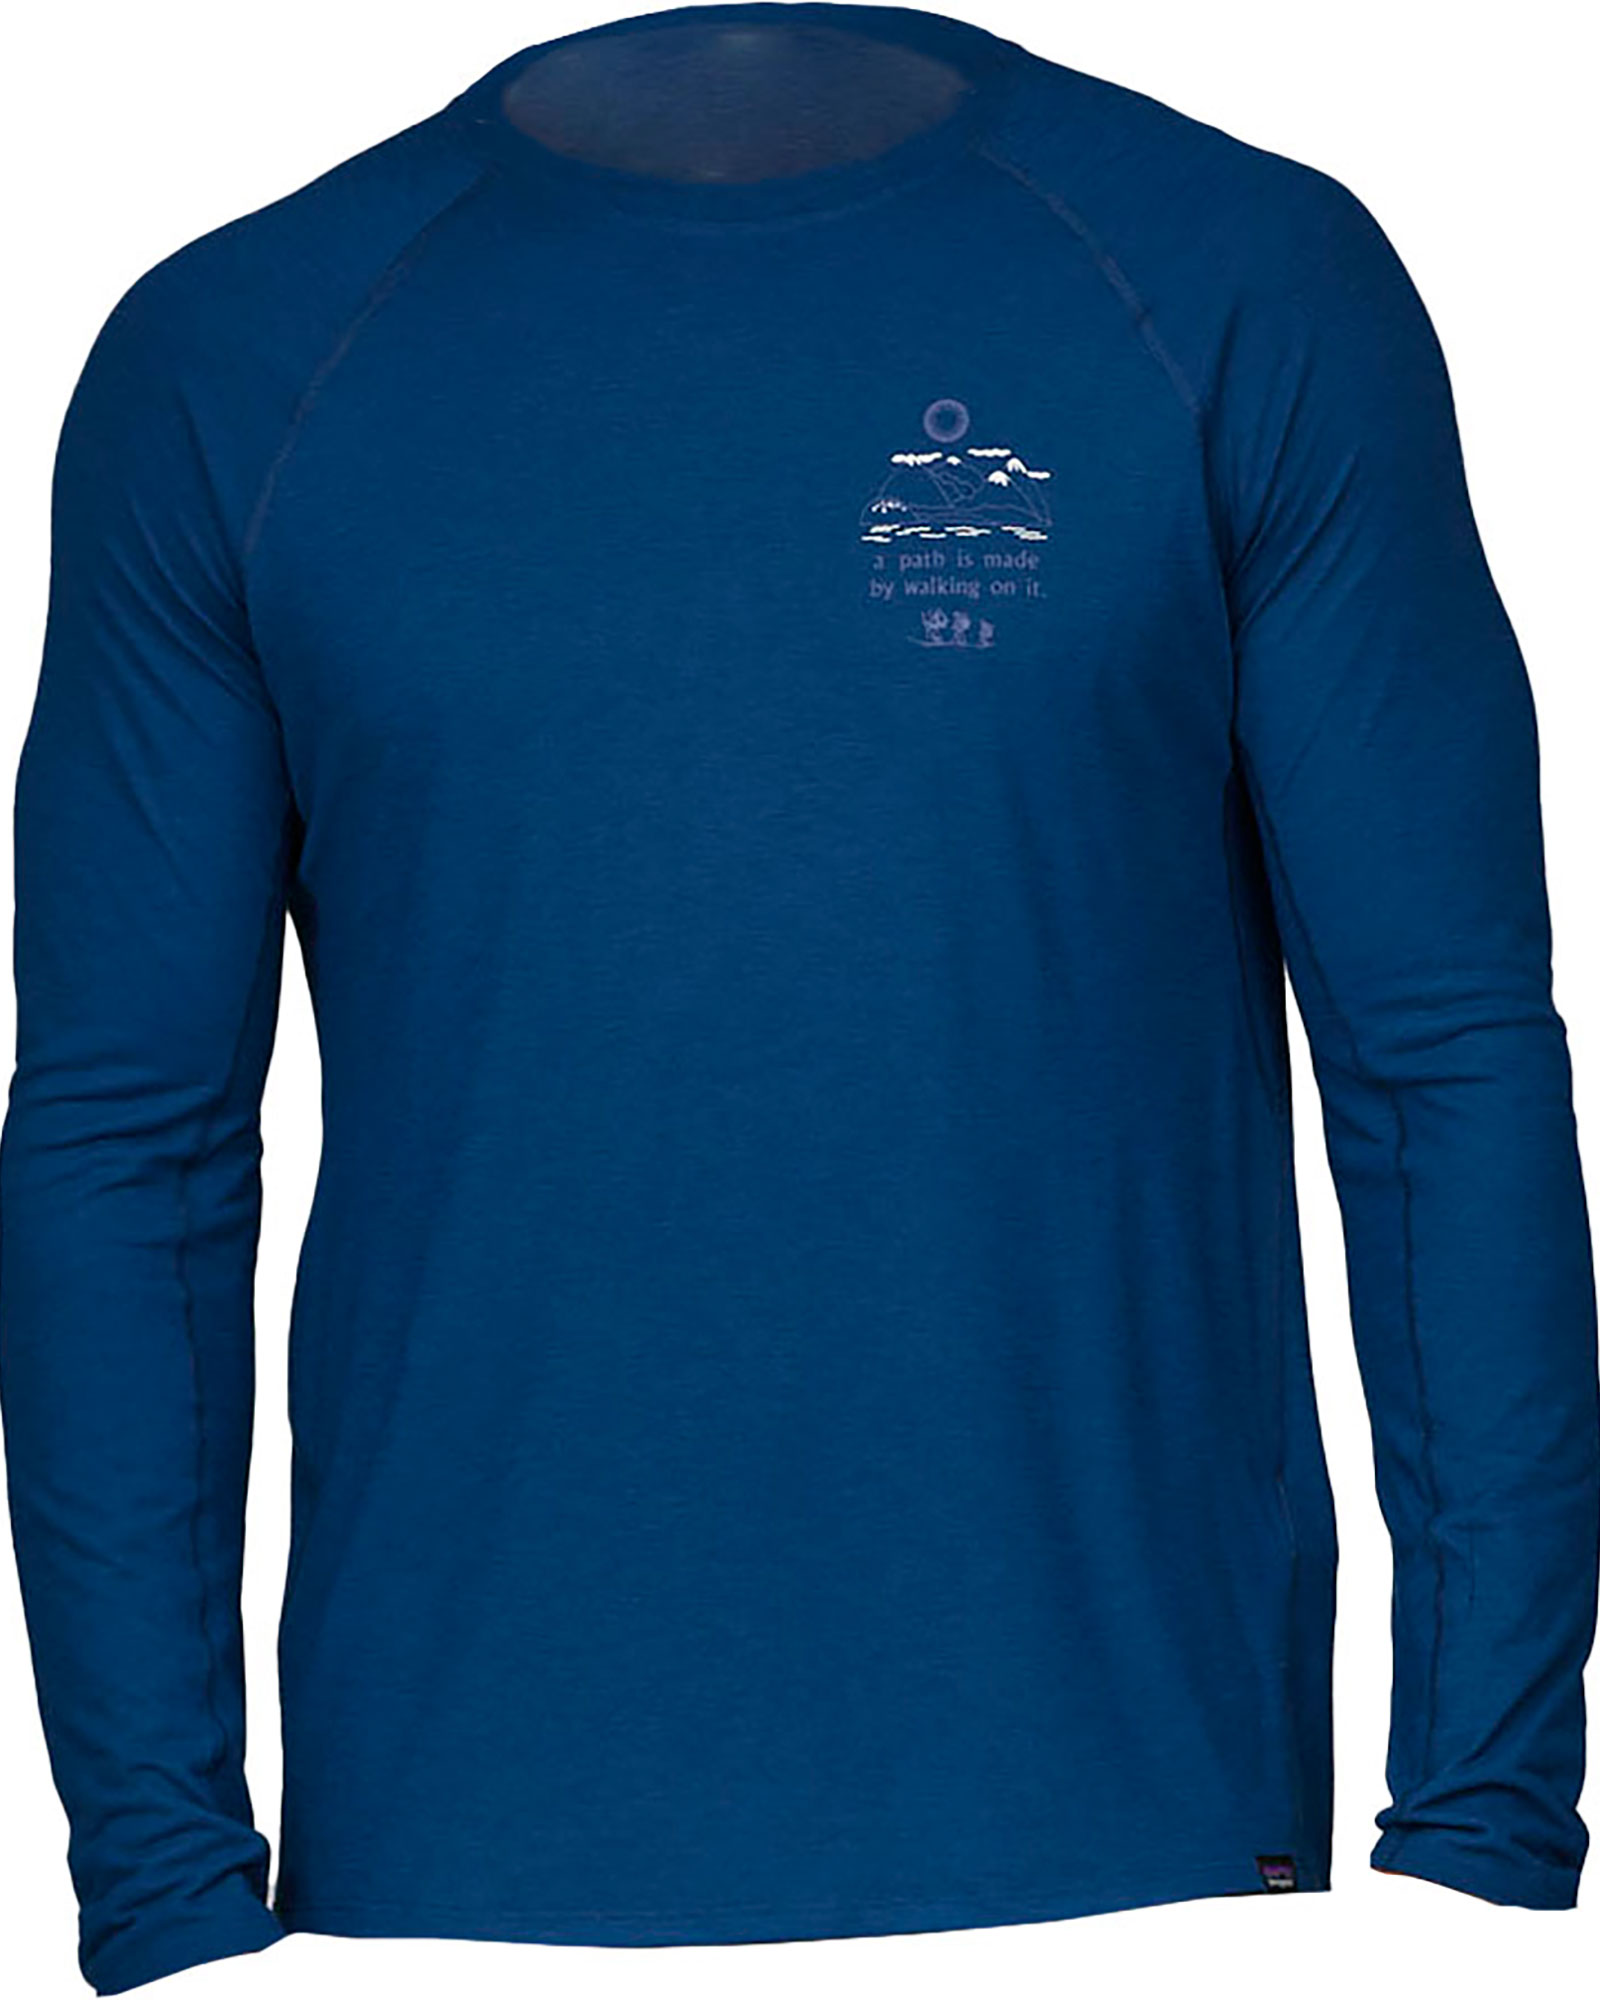 Patagonia Men’s Cap Cool Trail Long Sleeved Shirt - Lagom Blue XL